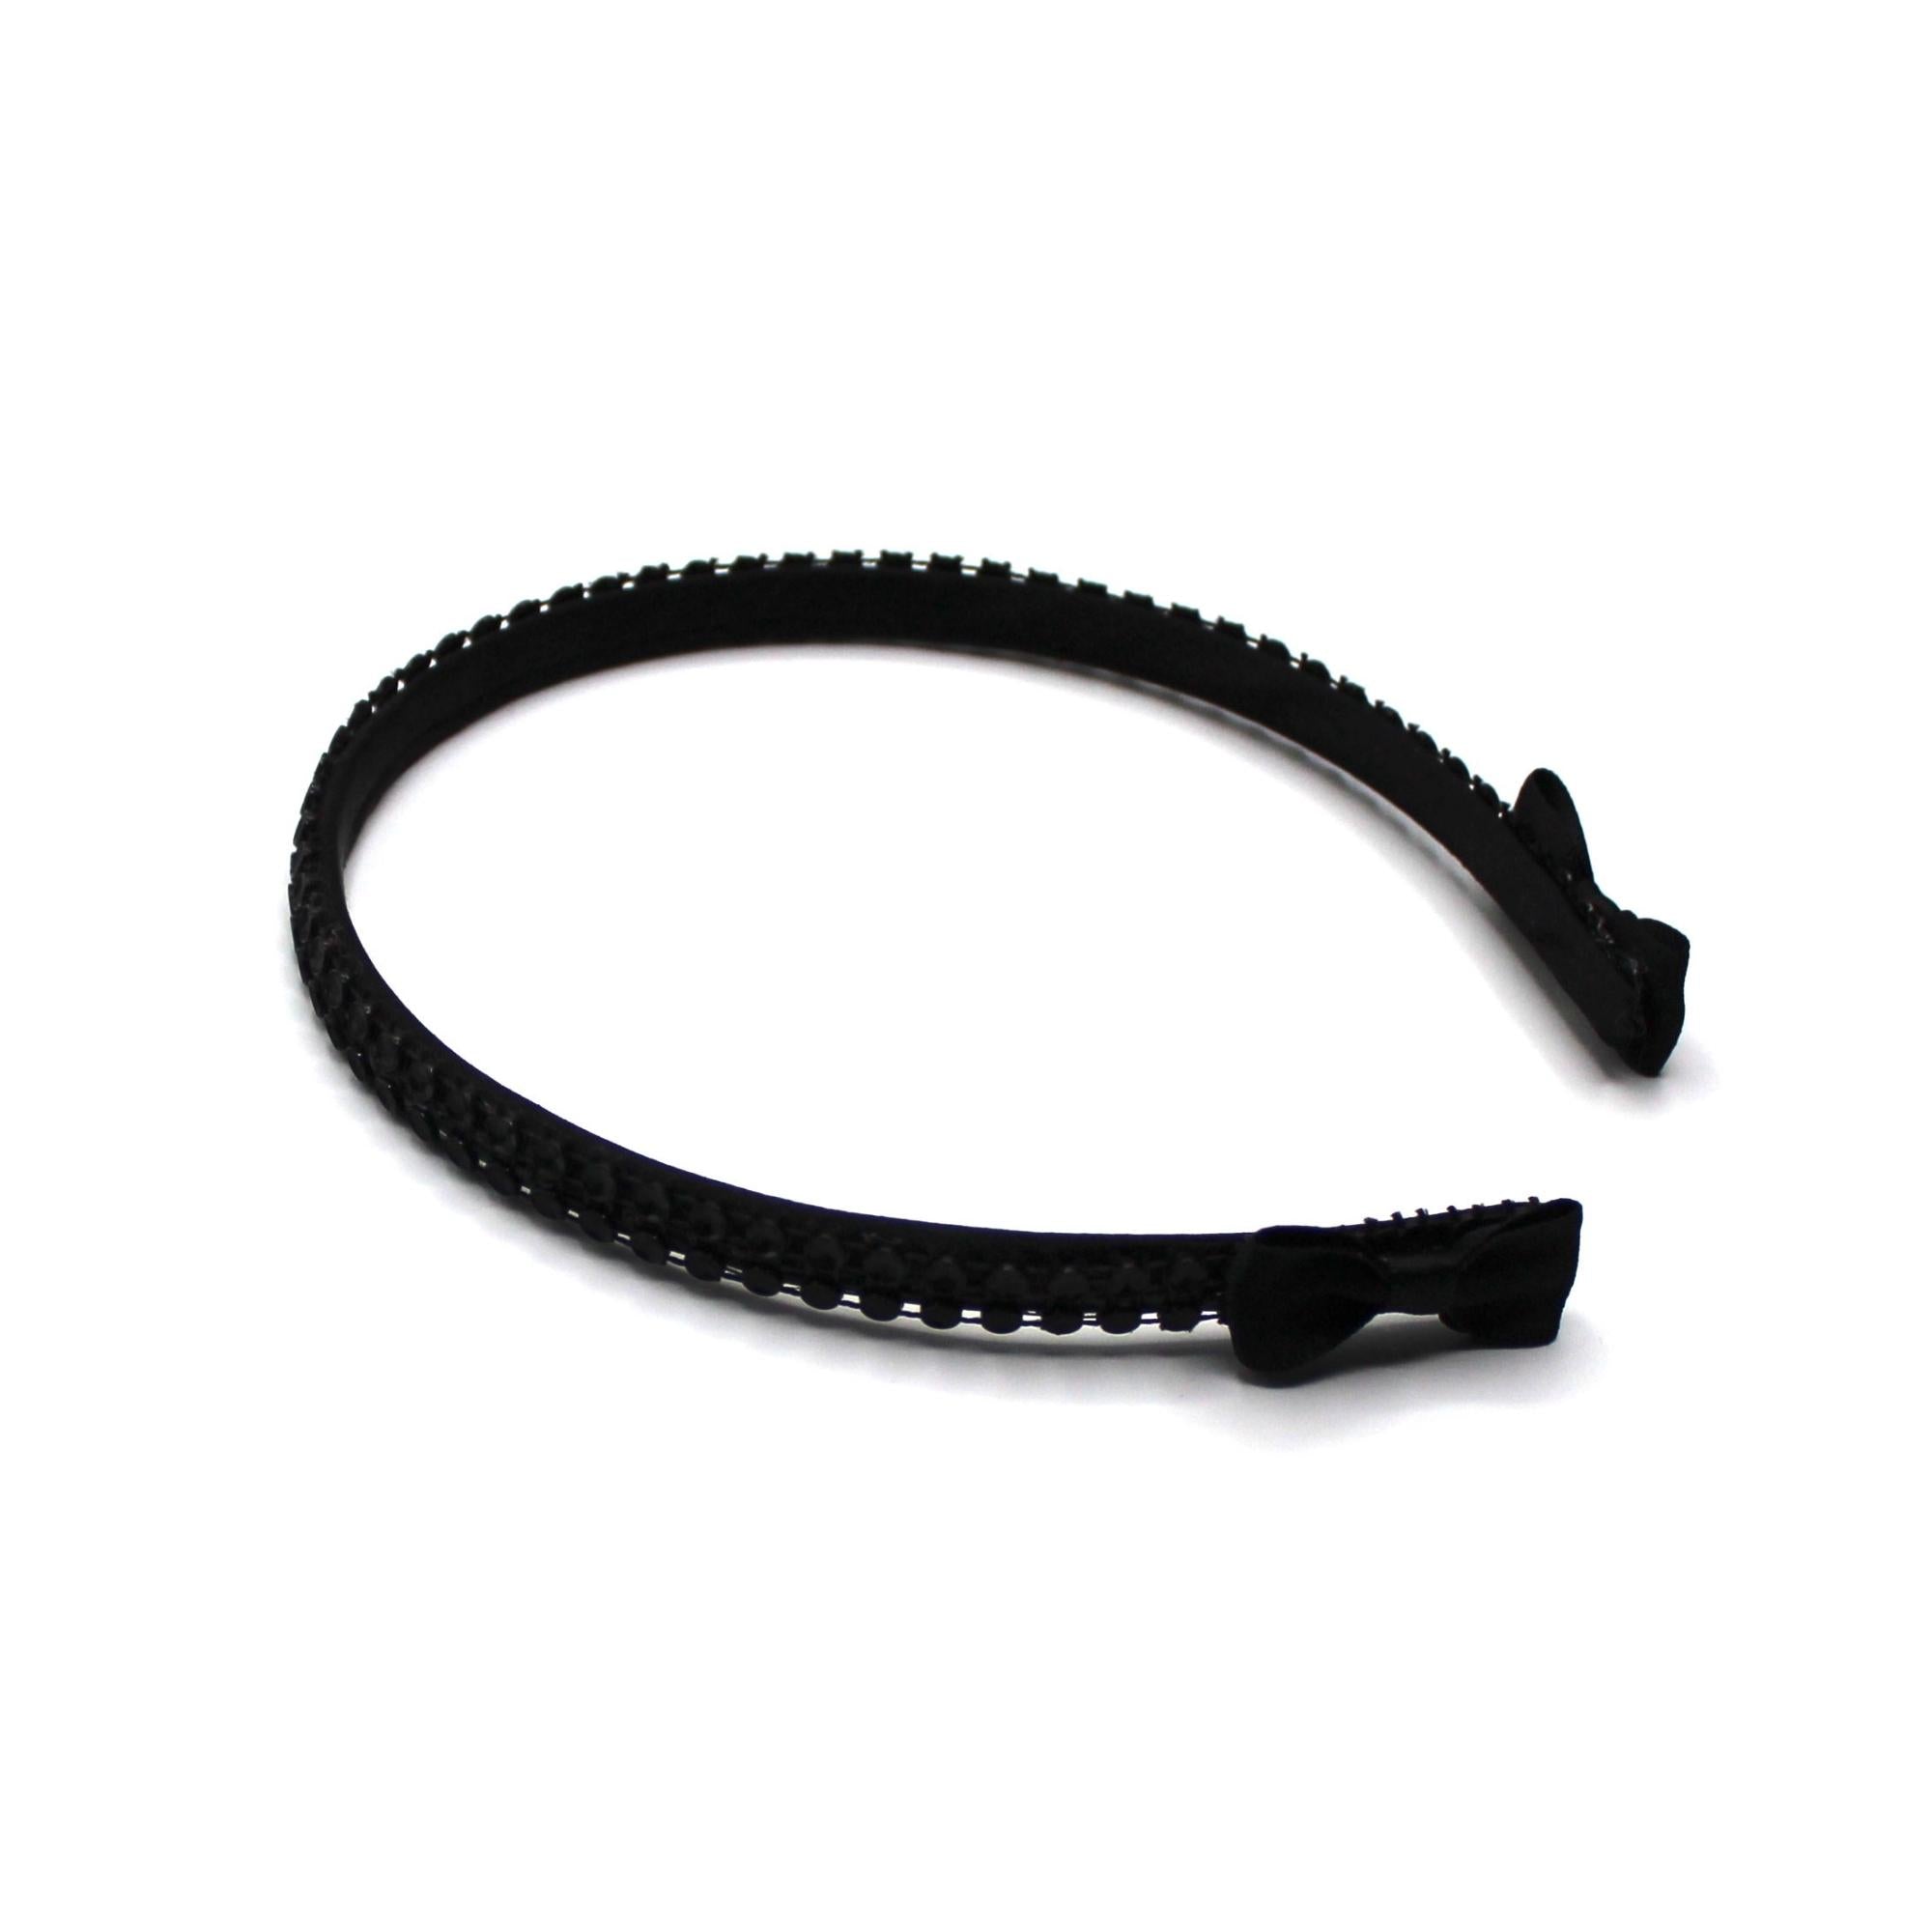 Black Sparkly Headband with Satin Black Bows